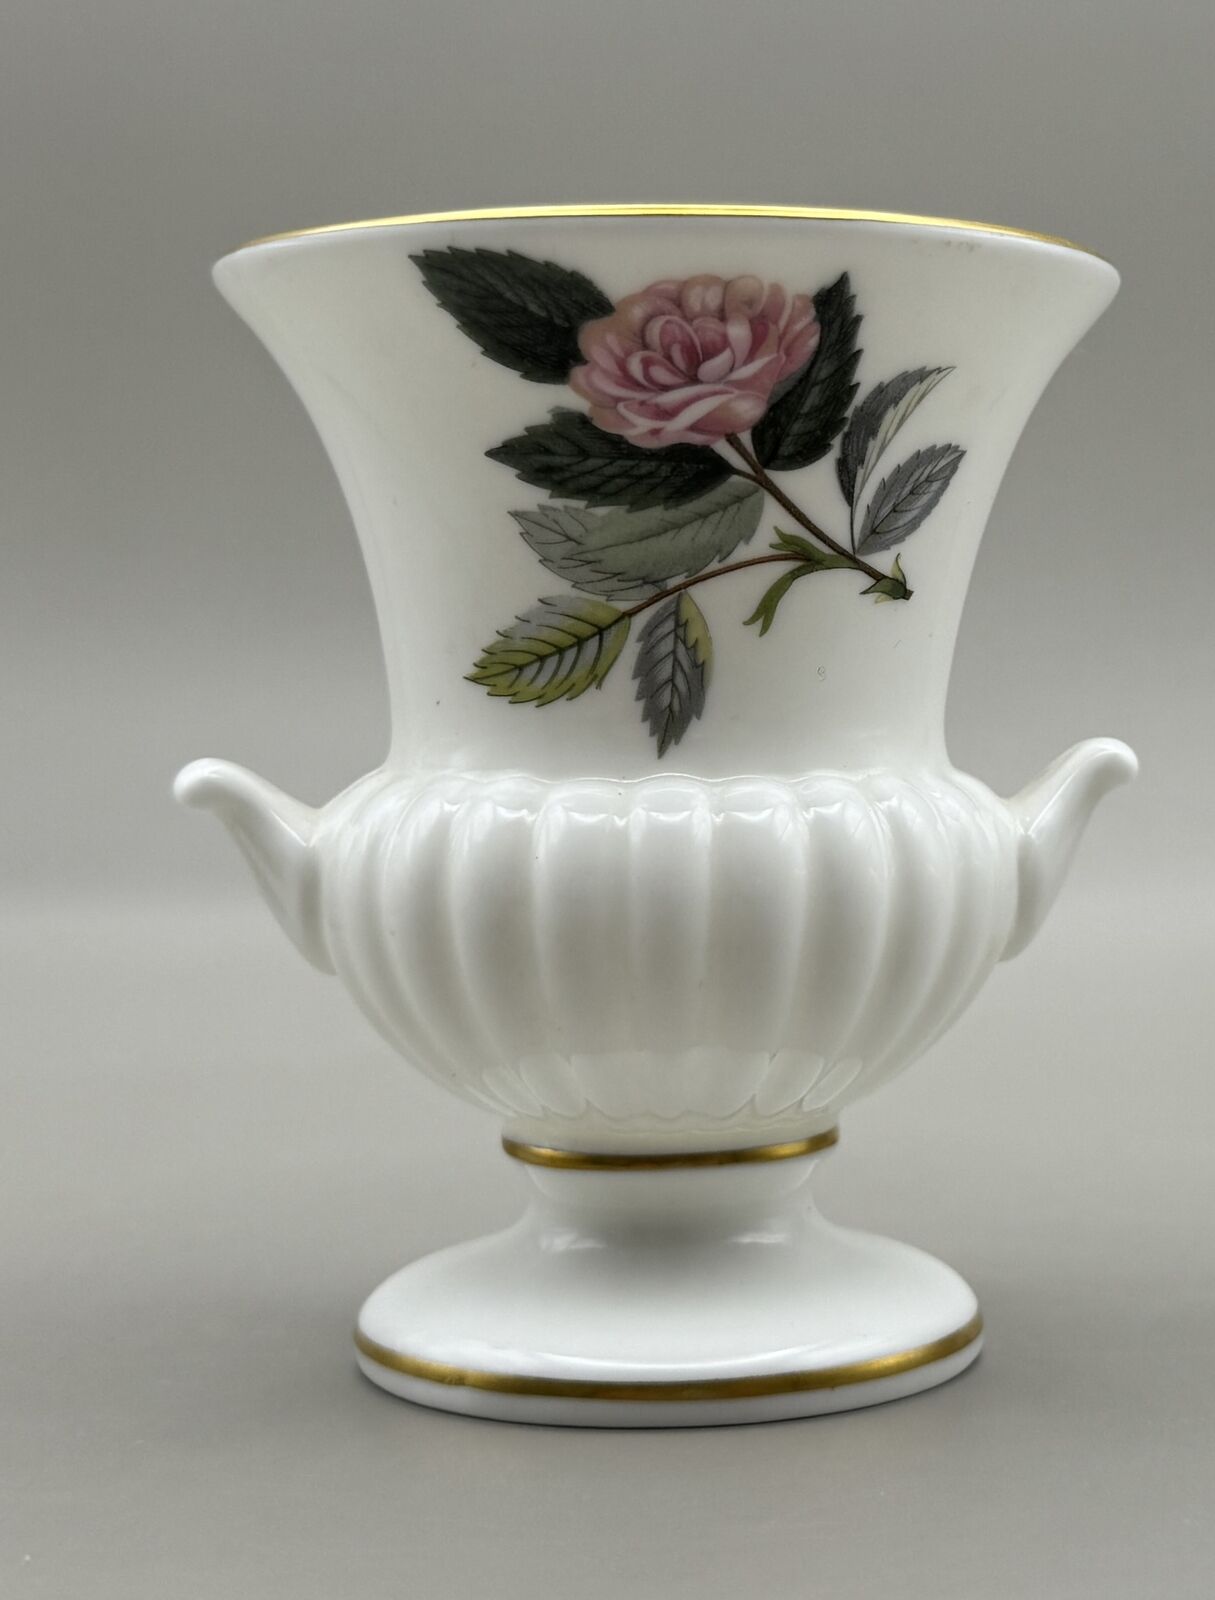 Vintage Wedgwood Bone China Urn Vase with Pink Rose Design - Made in England